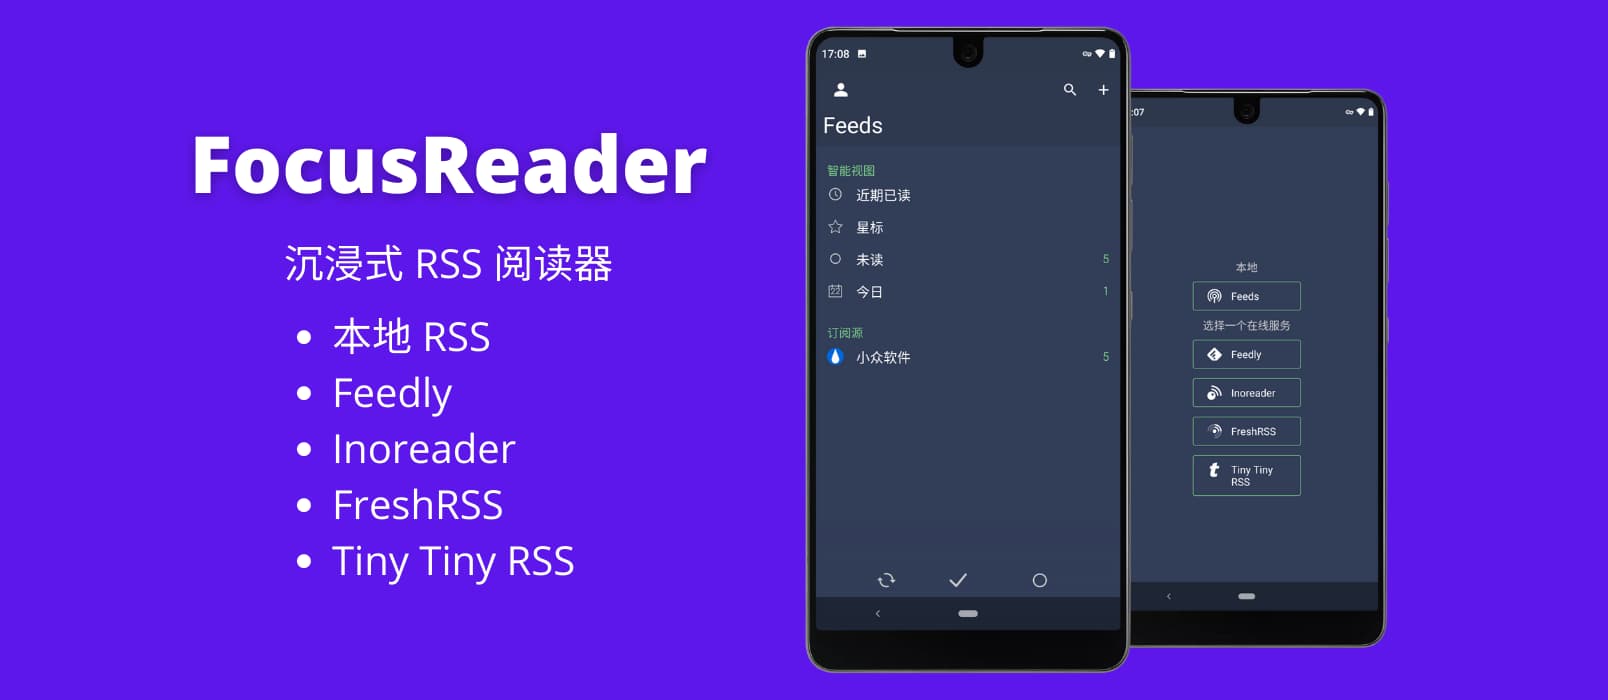 FocusReader 已支持本地 RSS、Feedly 等 5 种订阅源，沉浸式 RSS 阅读器[Android] 1